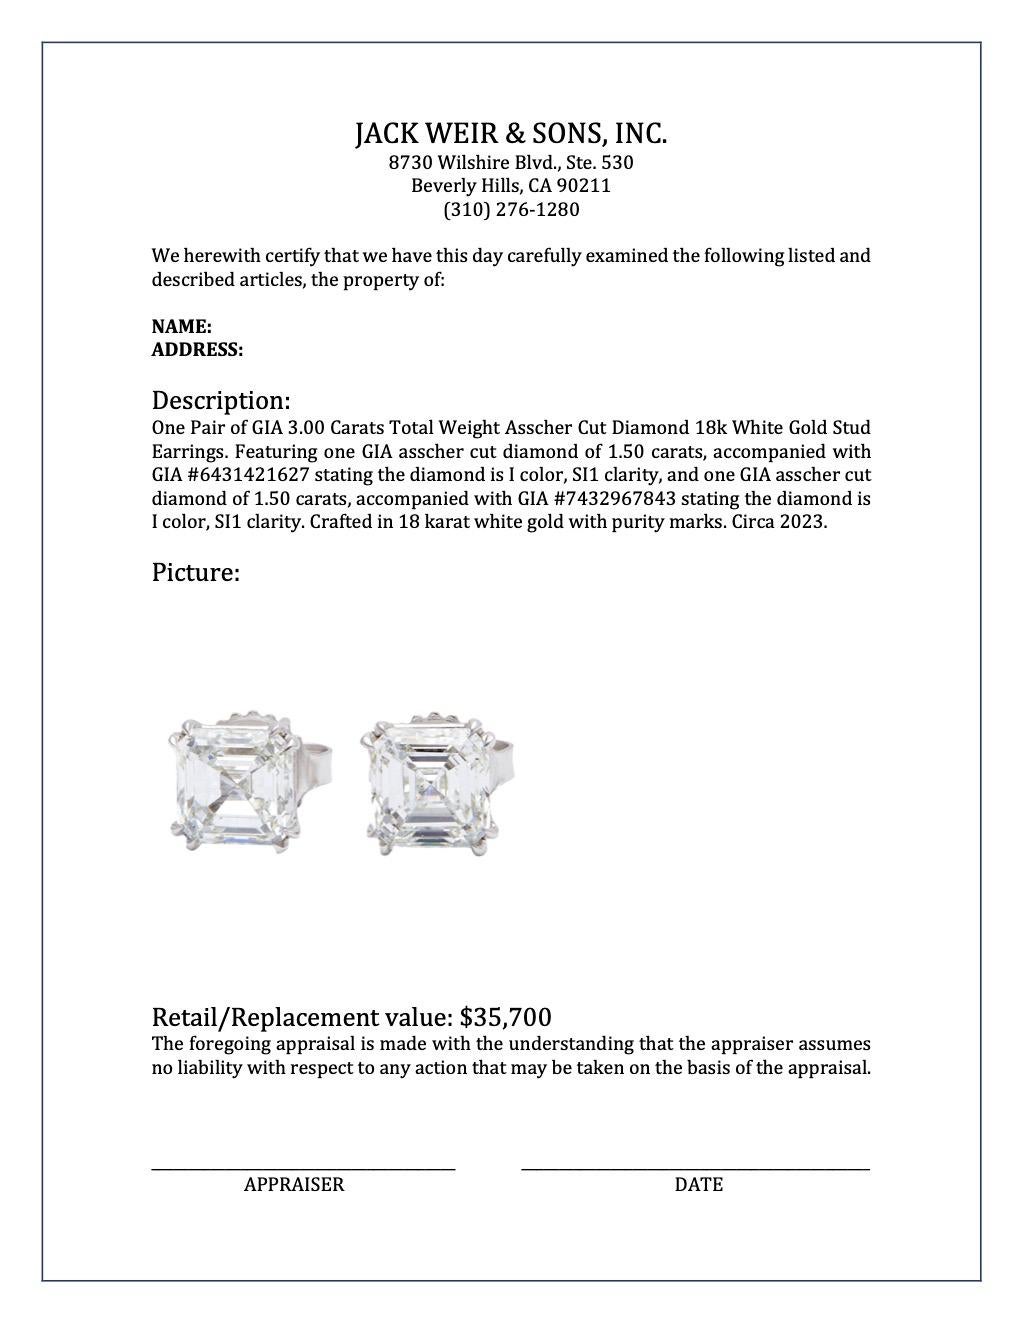 GIA 3.00 Carats Total Weight Asscher Cut Diamond 18k White Gold Stud Earrings 4